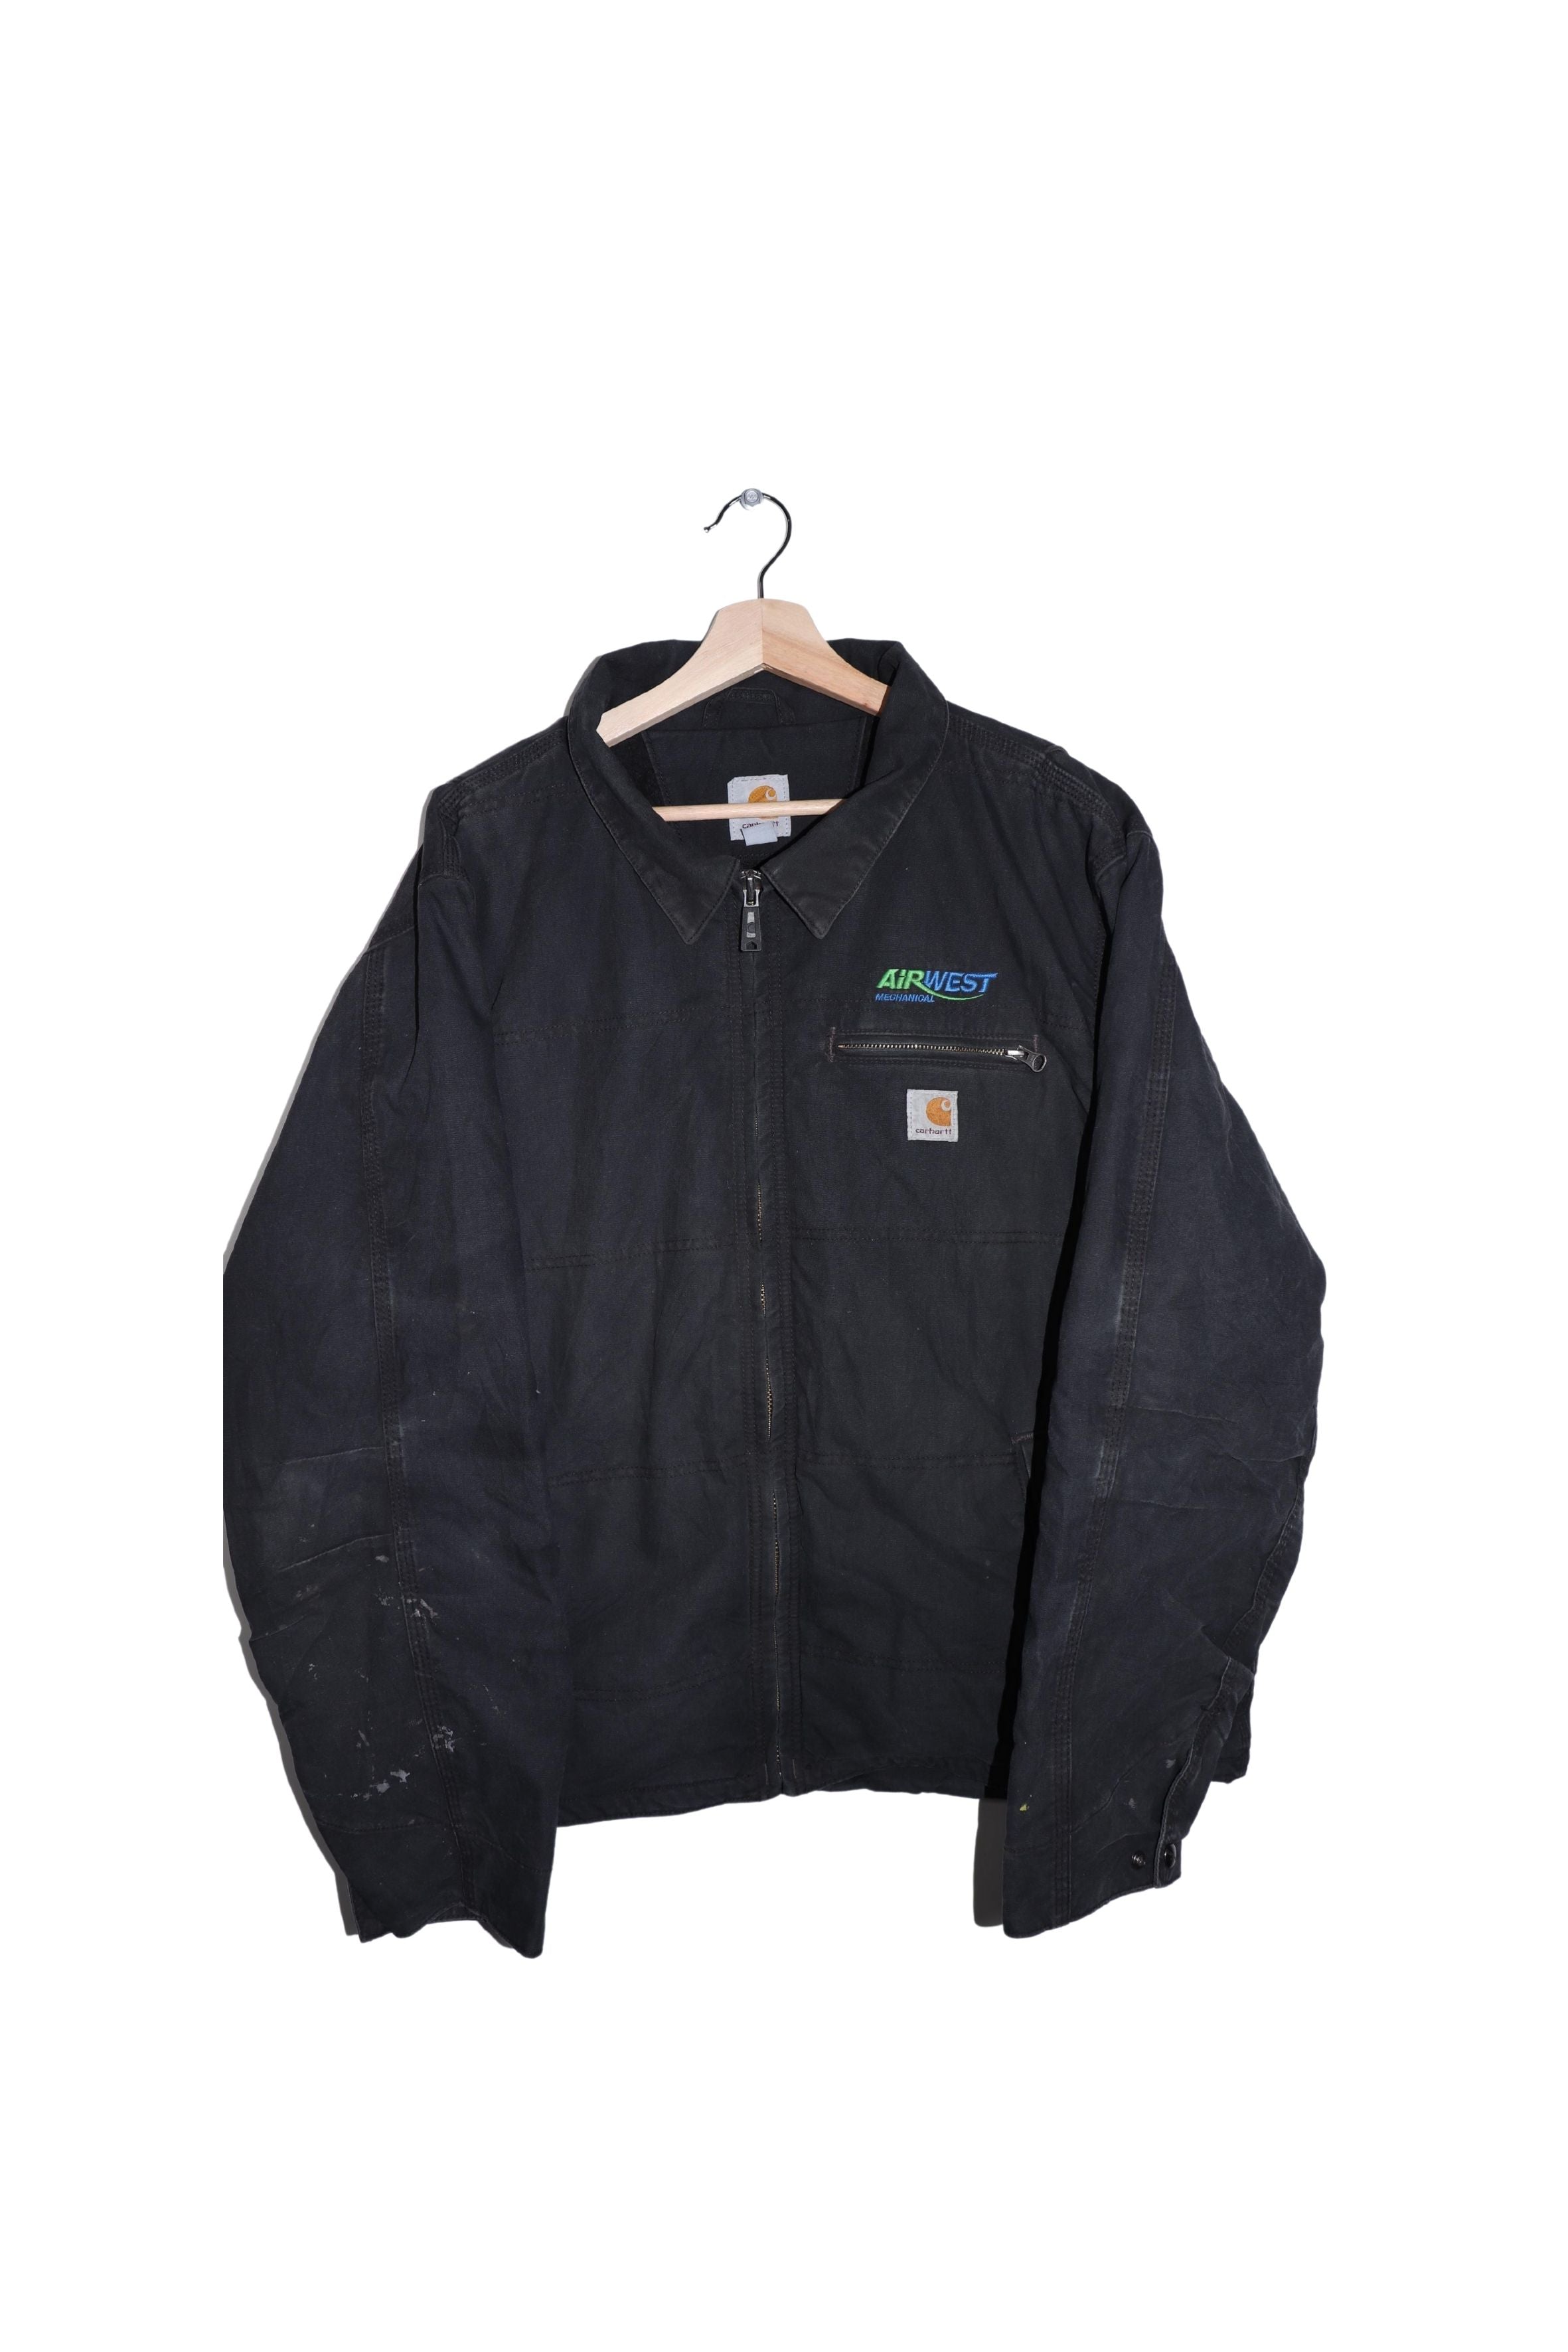 Vintage 2000s Carhartt Detroit Workers Jacket Size XL